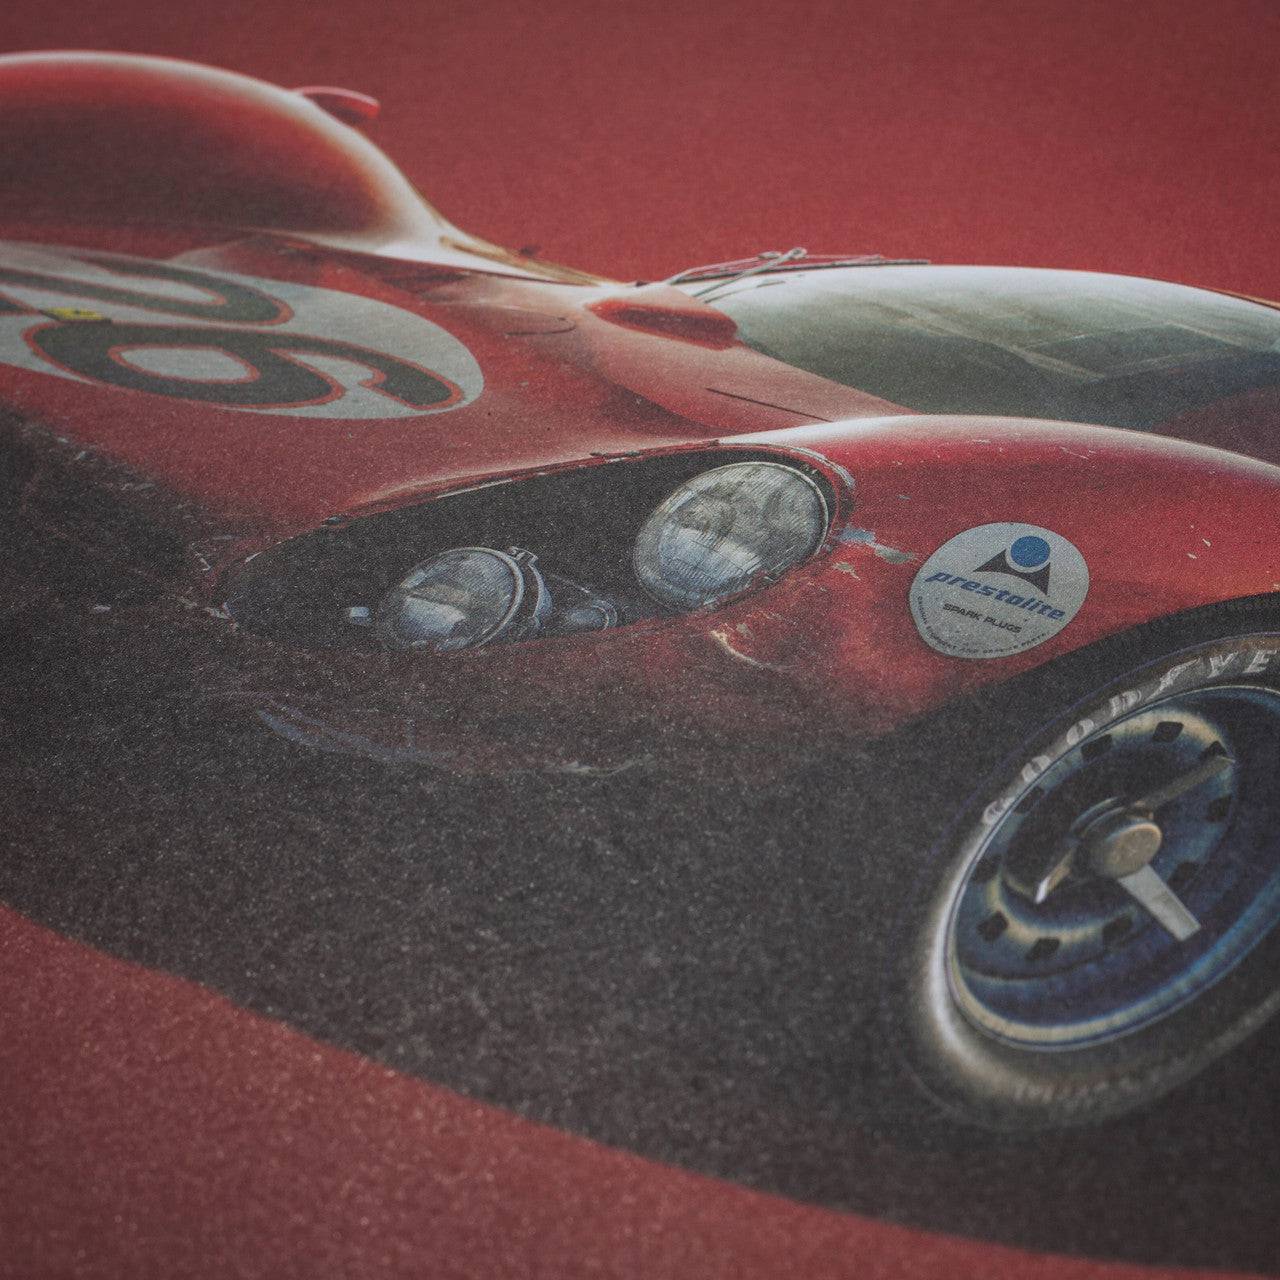 Ferrari 412P - Red - Daytona - 1967 - Colors of Speed Poster